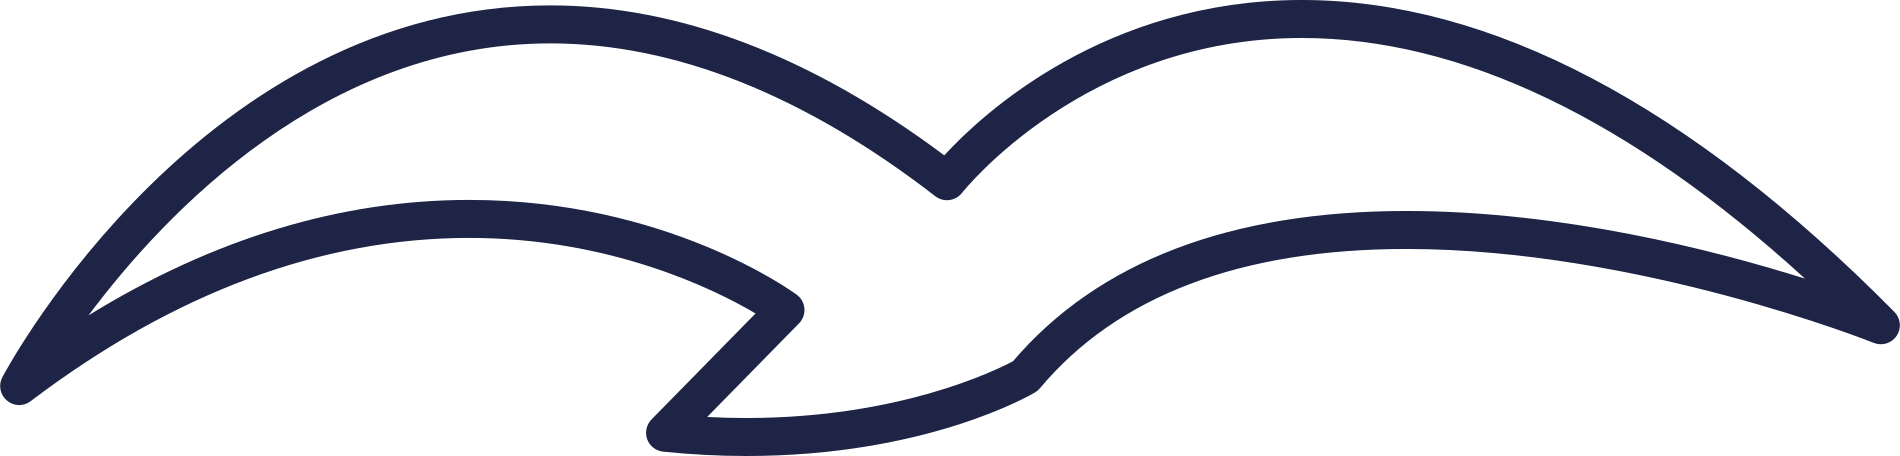 seagull line Illustration in PNG, SVG